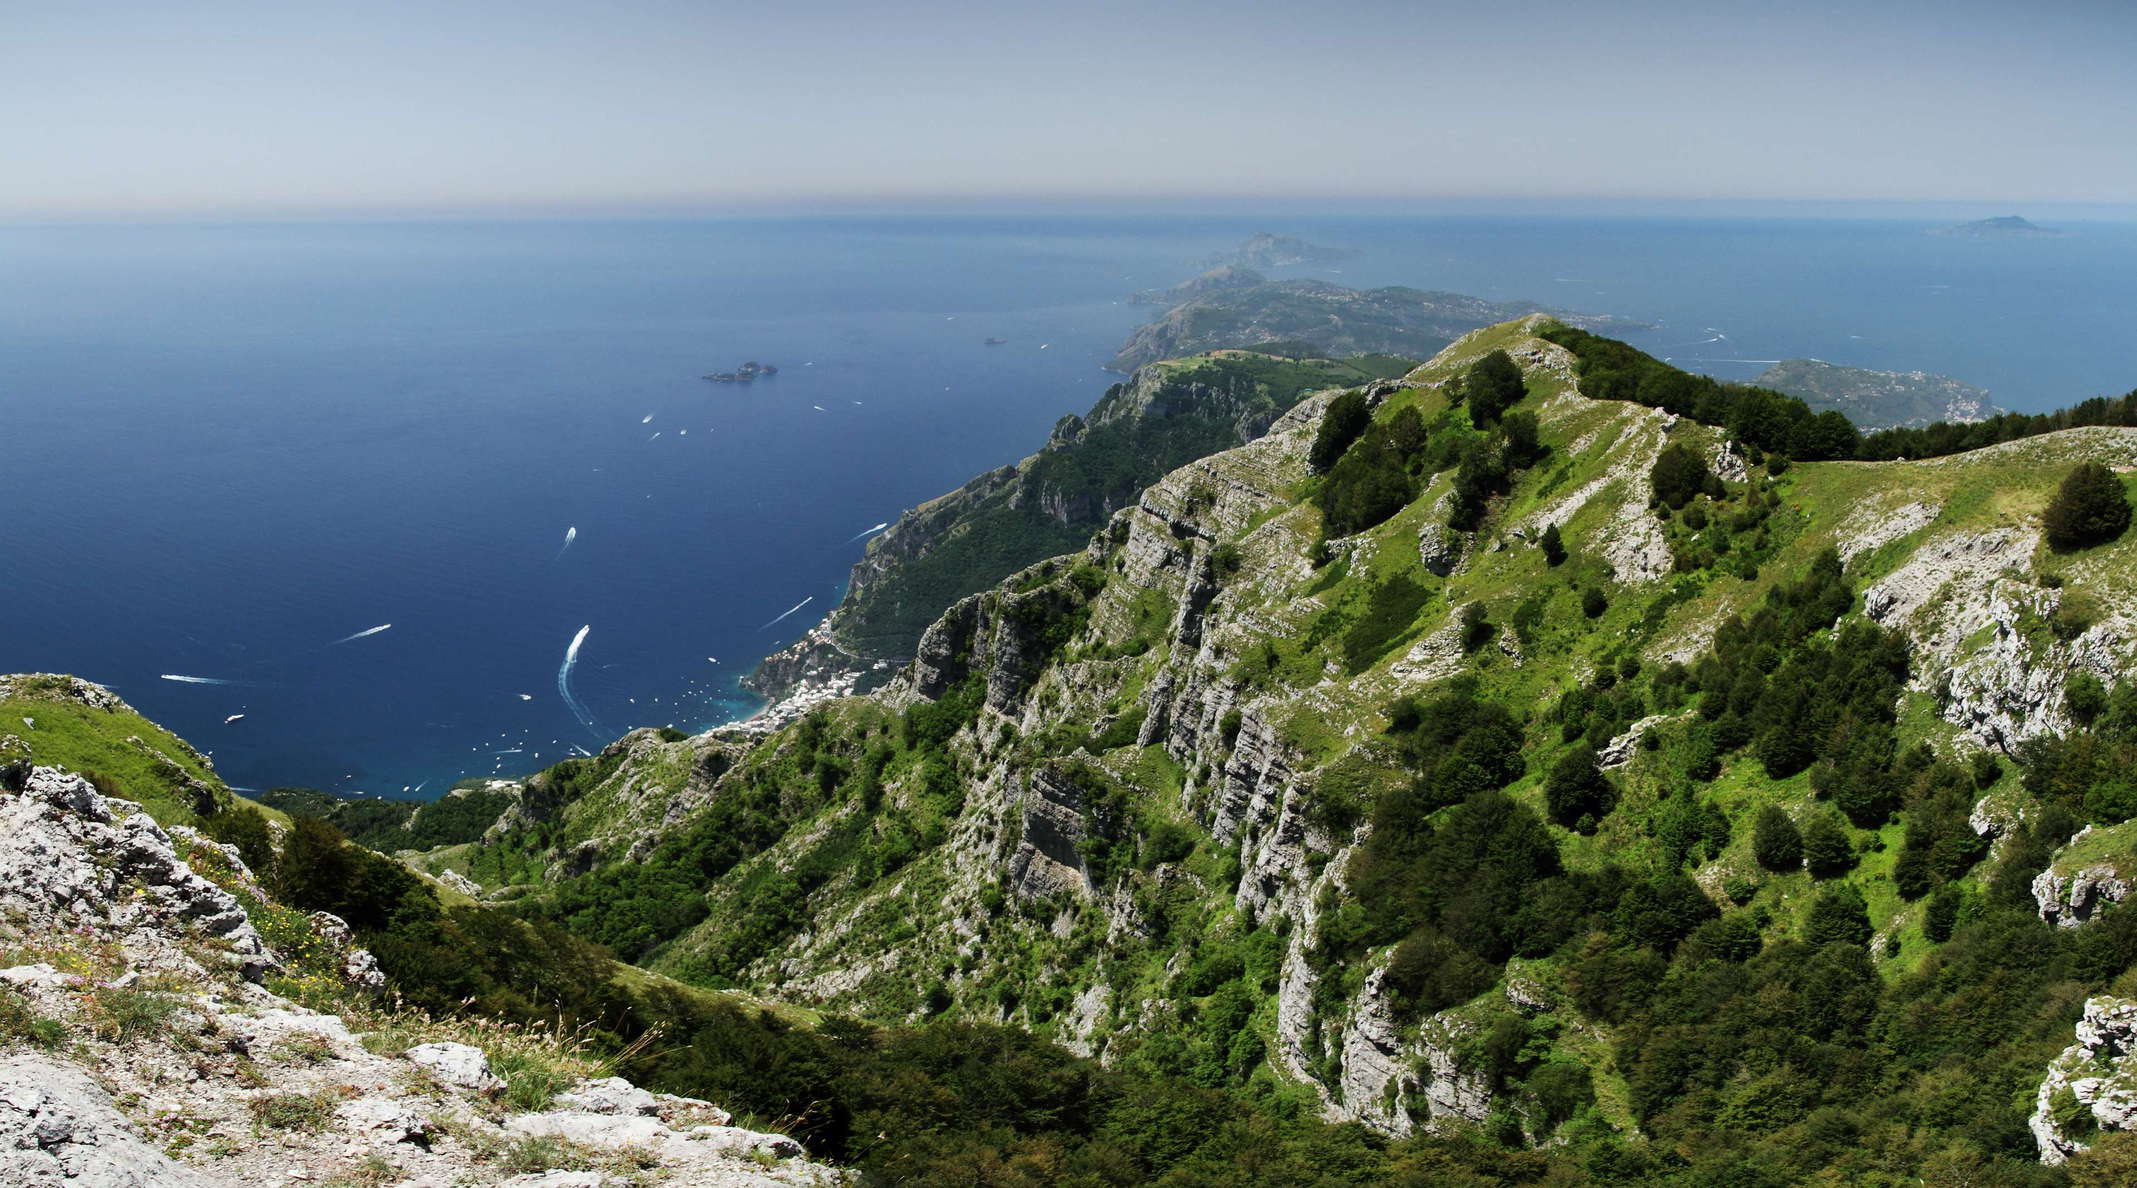 Monti Lattari and Sorrento Peninsula